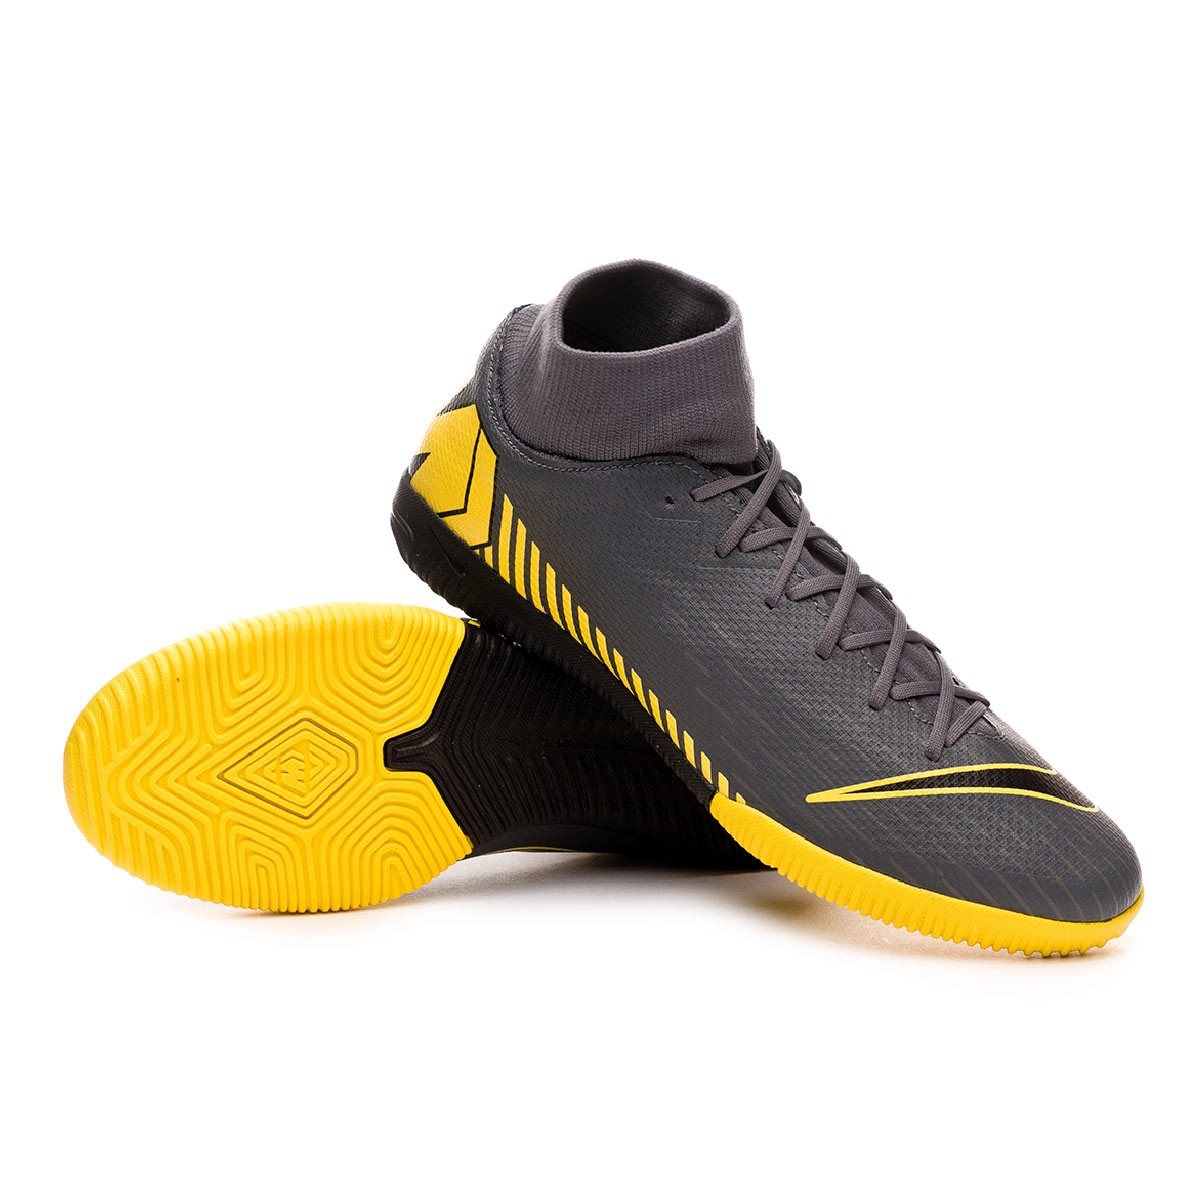 Nike Mercurial Superfly 6 Pro FG Black Vivid Gold soccerloco